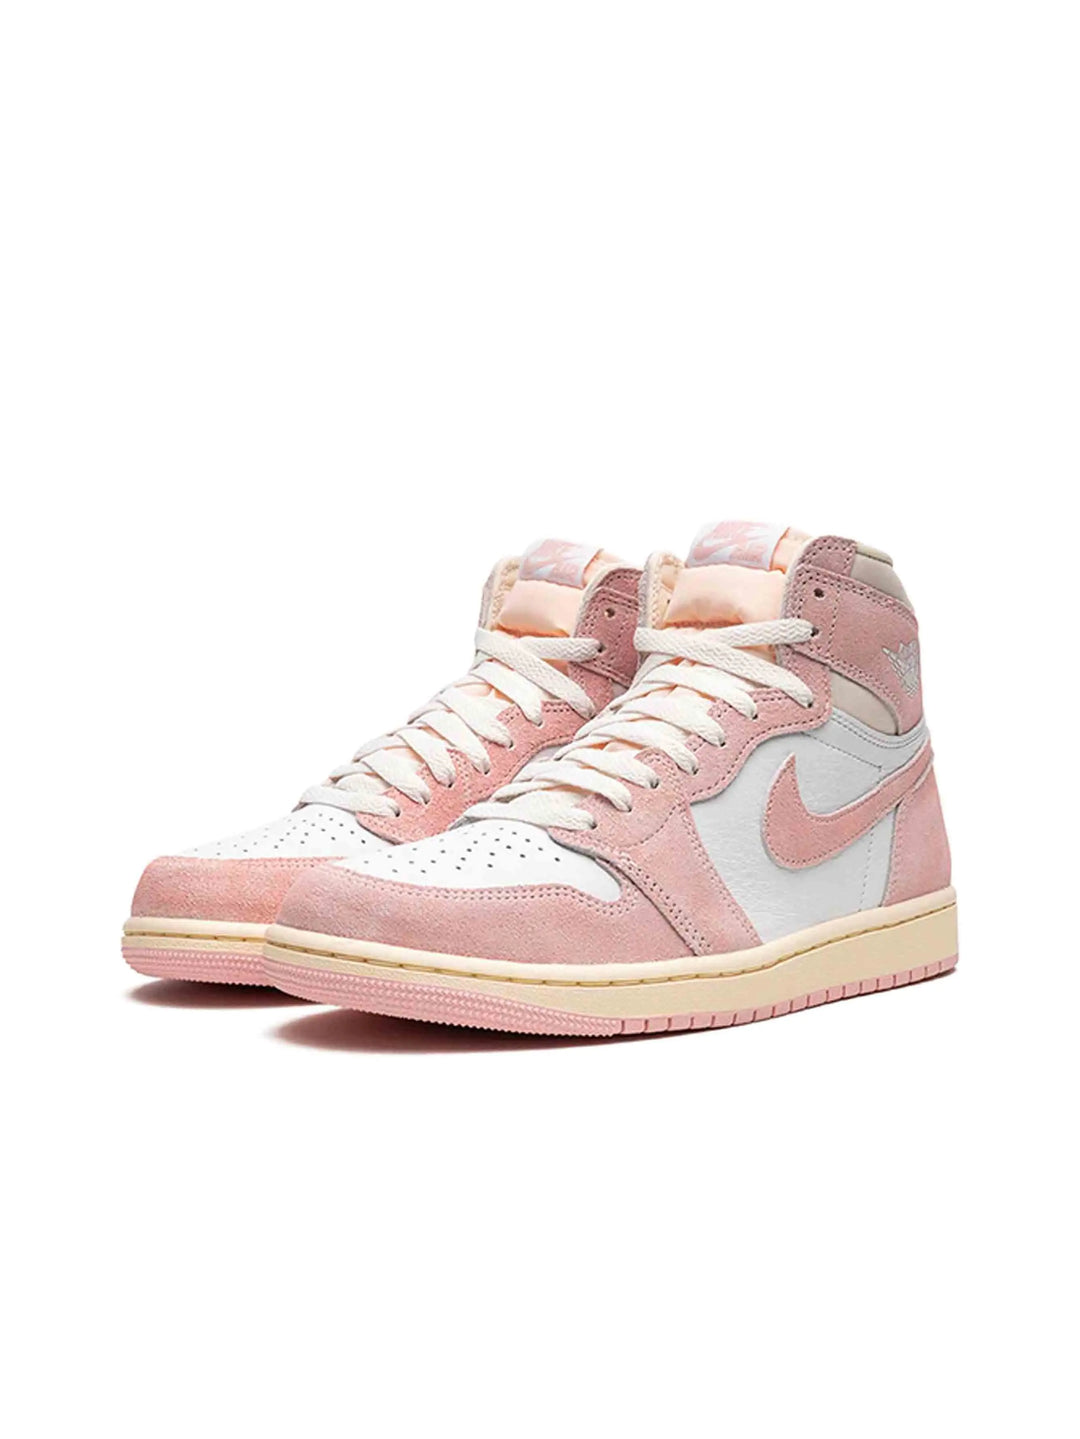 Nike Air Jordan 1 Retro High OG Washed Pink (W) Prior